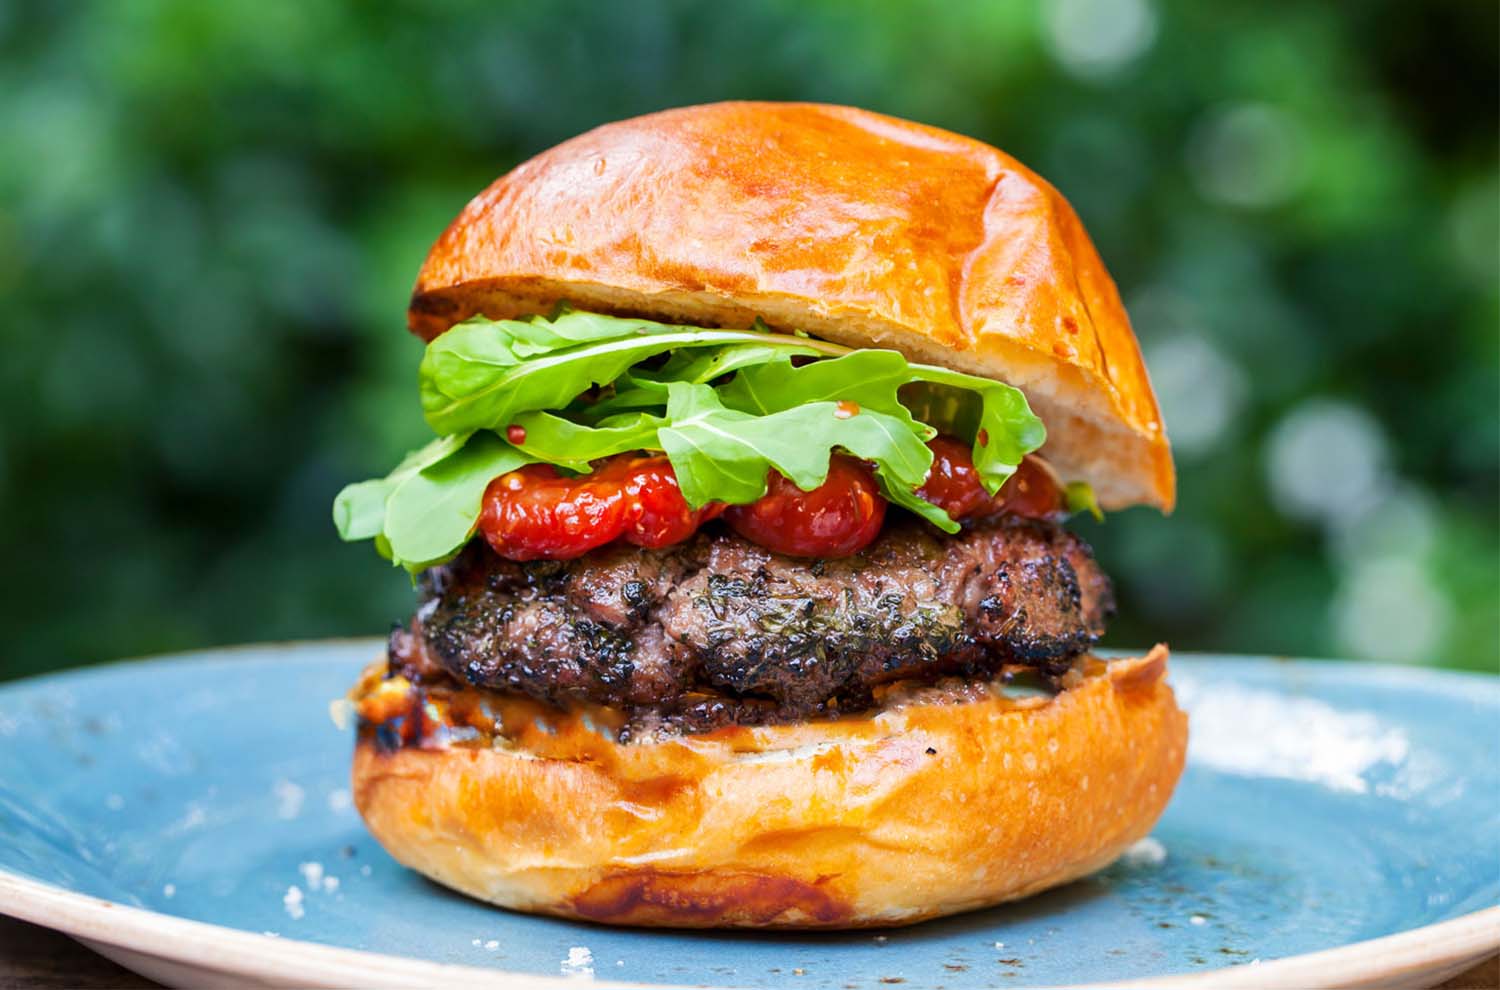 Burger with brioche bun, red sauce, arugula on blue plate